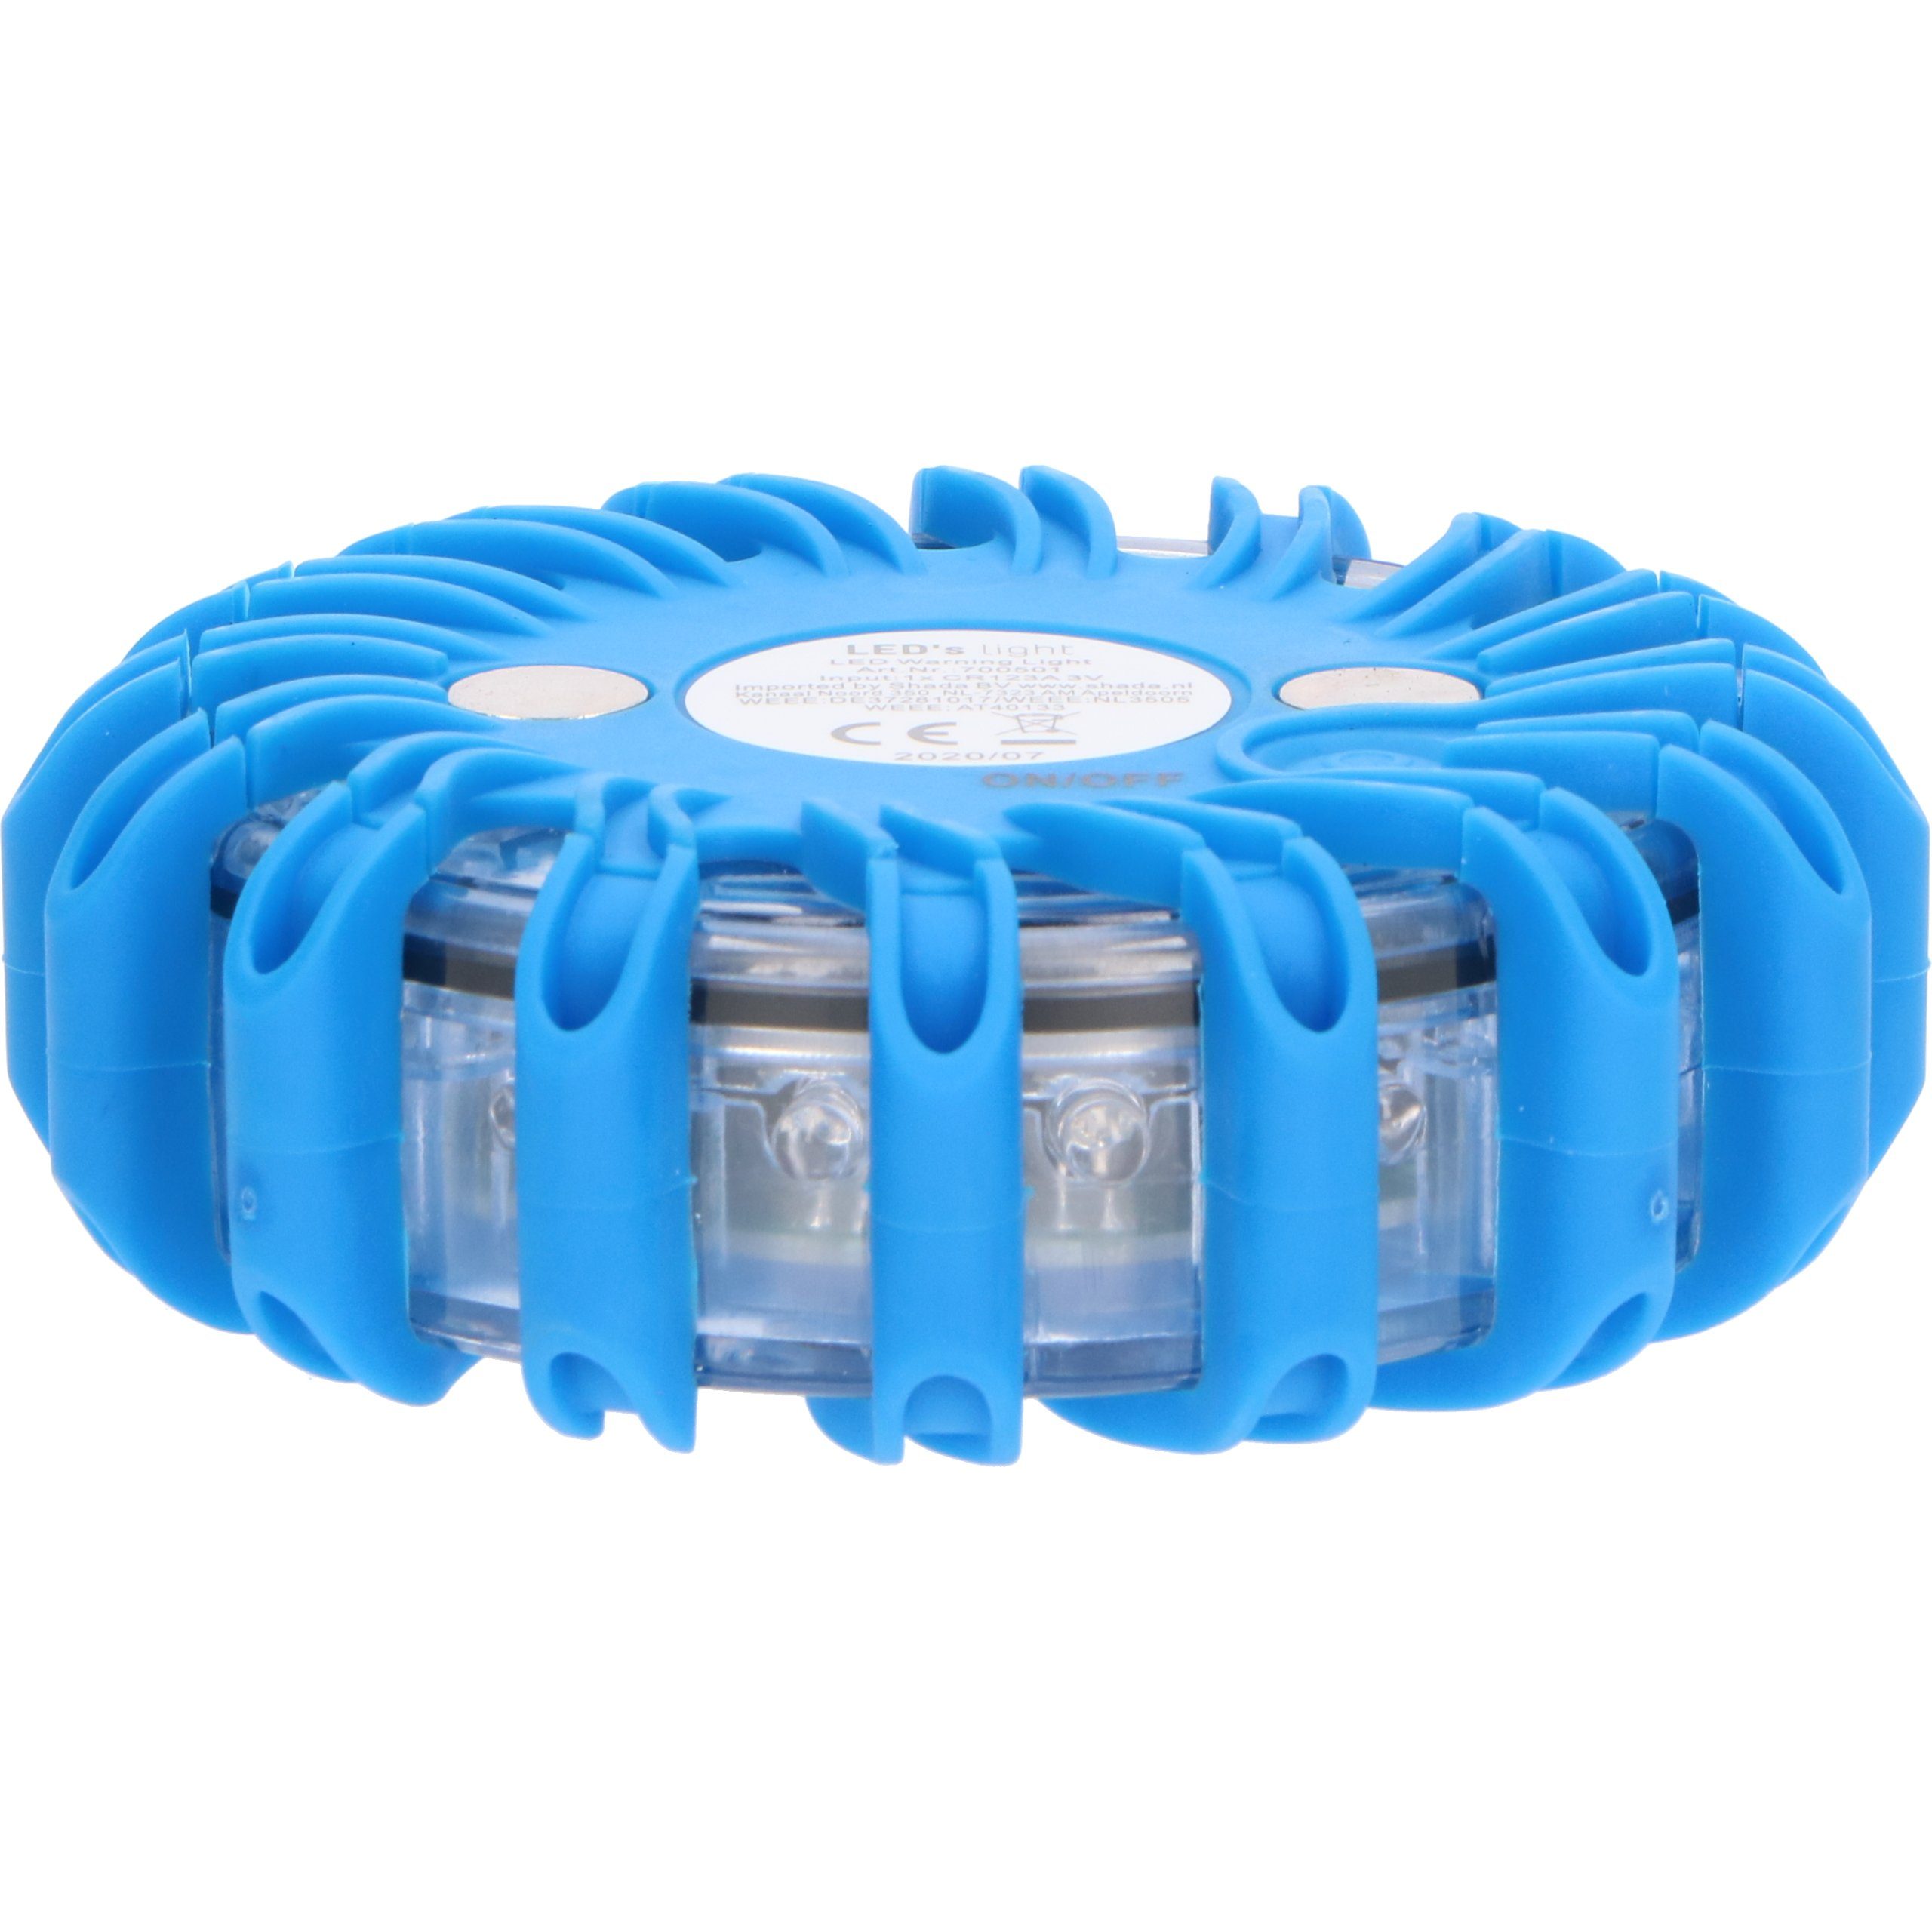 Lithiumbatterie 2W light LED's 0700501 blau LED-Sicherheitsleuchte, IP67 LED, Rundumleuchte